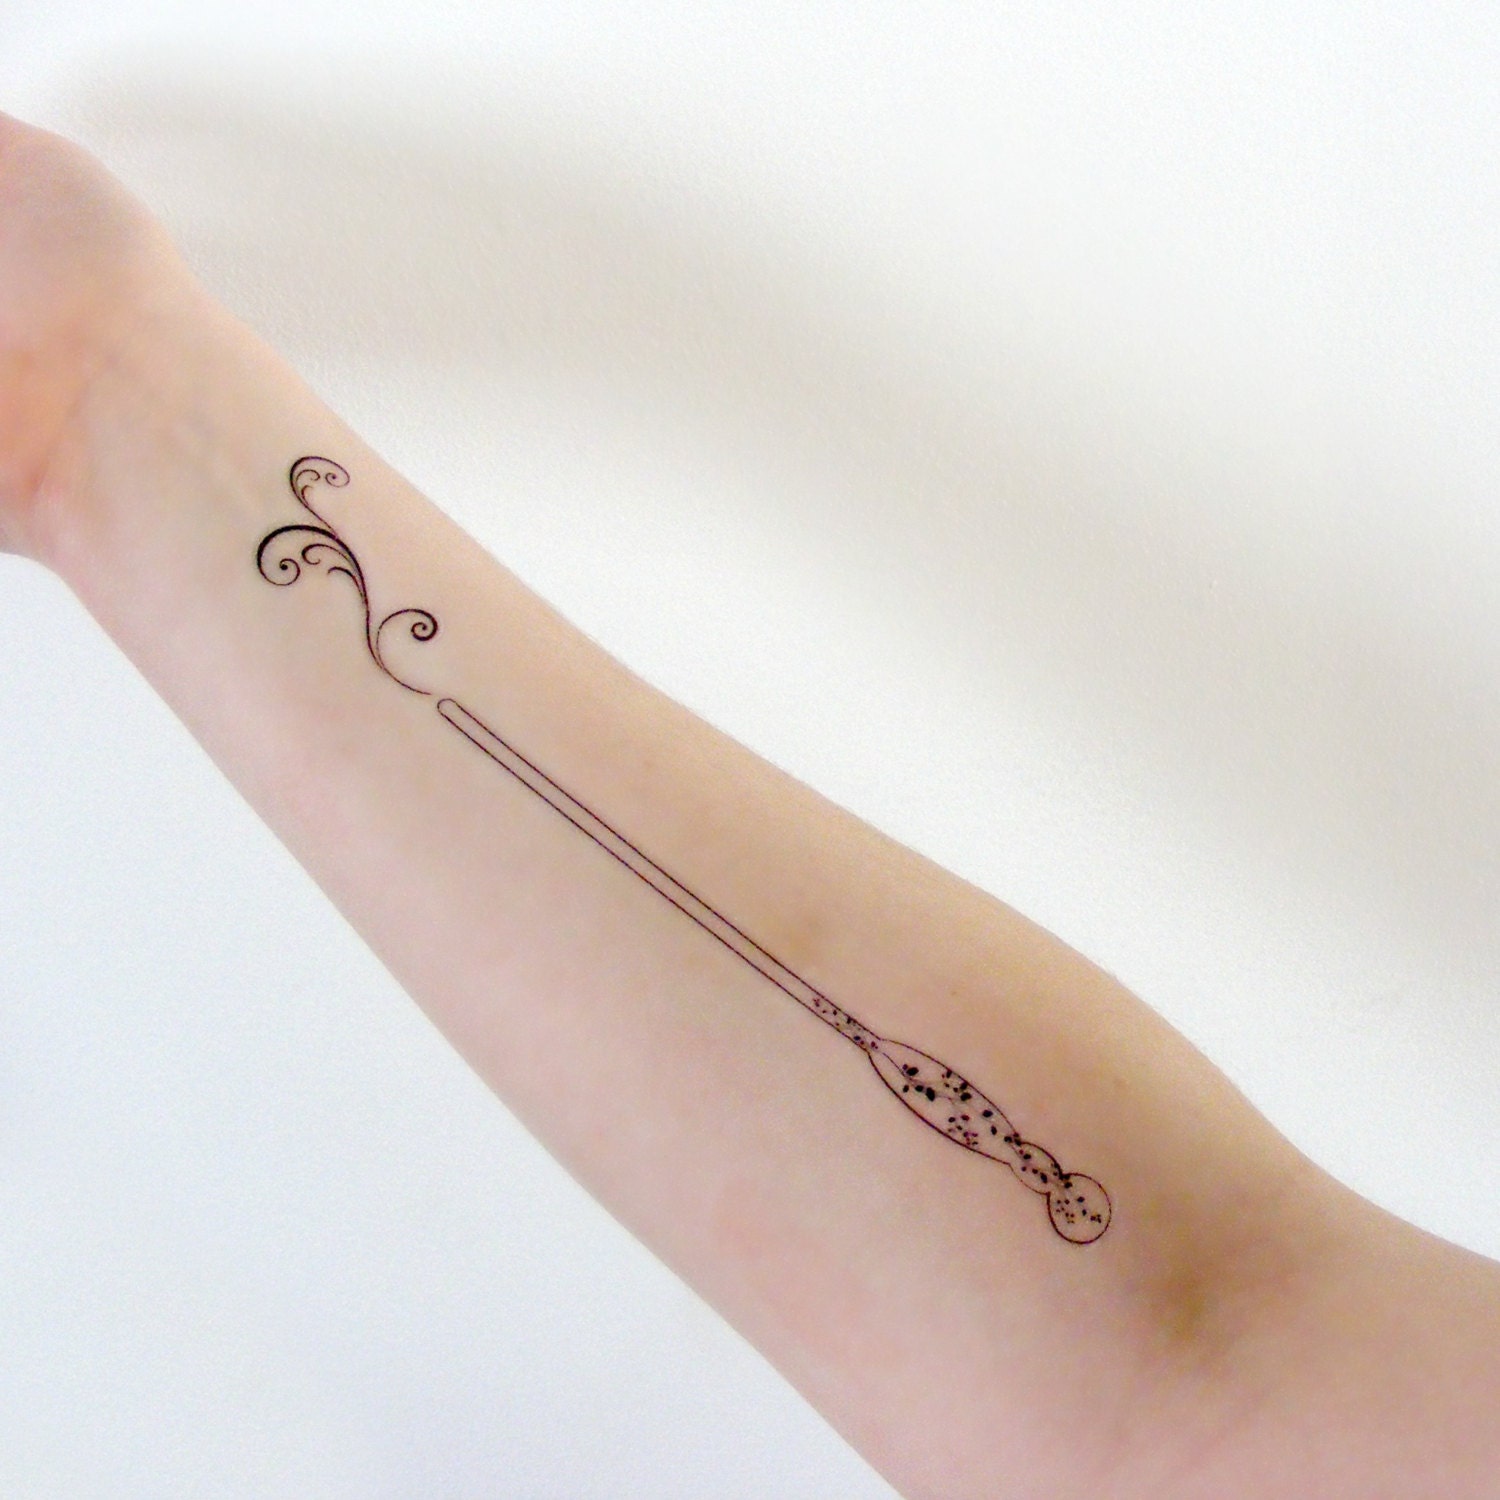 magic wand tattoo